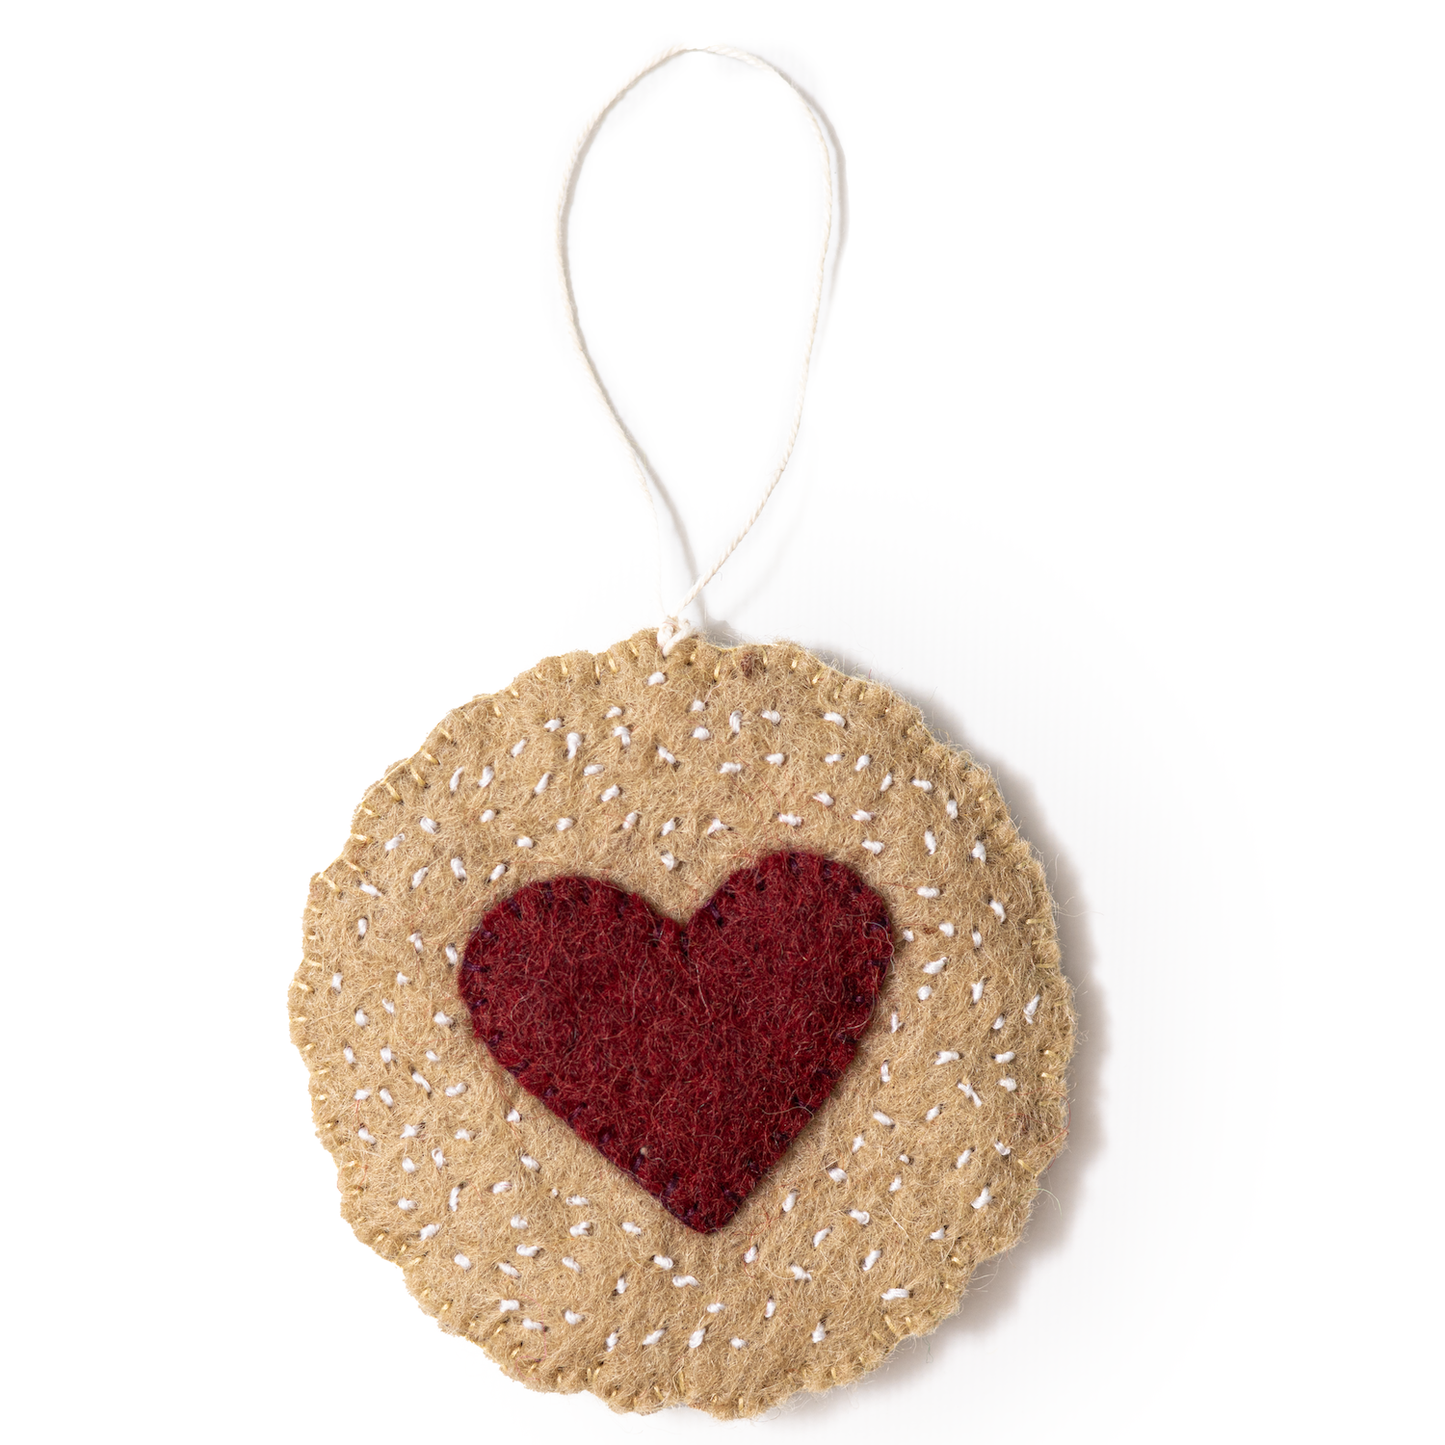 Felt Sweet Treat Ornaments: Linzer Cookie